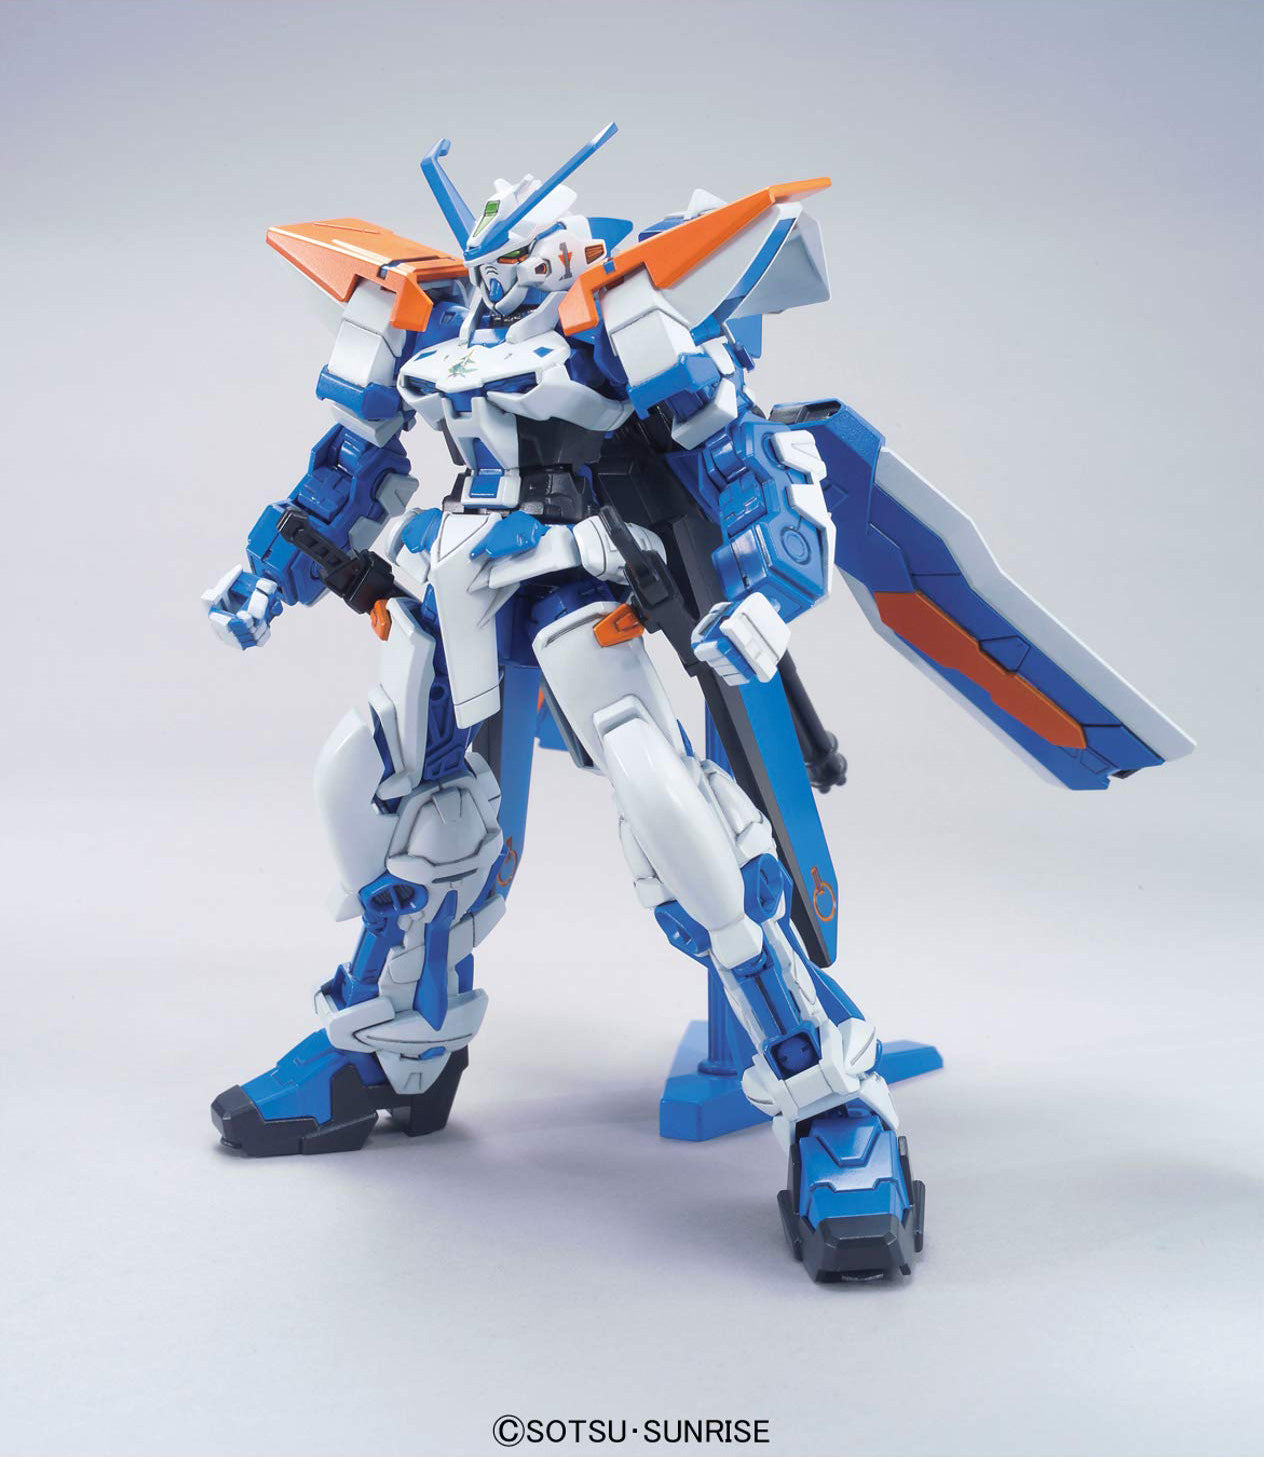 HGCE - MBF-P03R Gundam Astray Blue Frame Second Revise